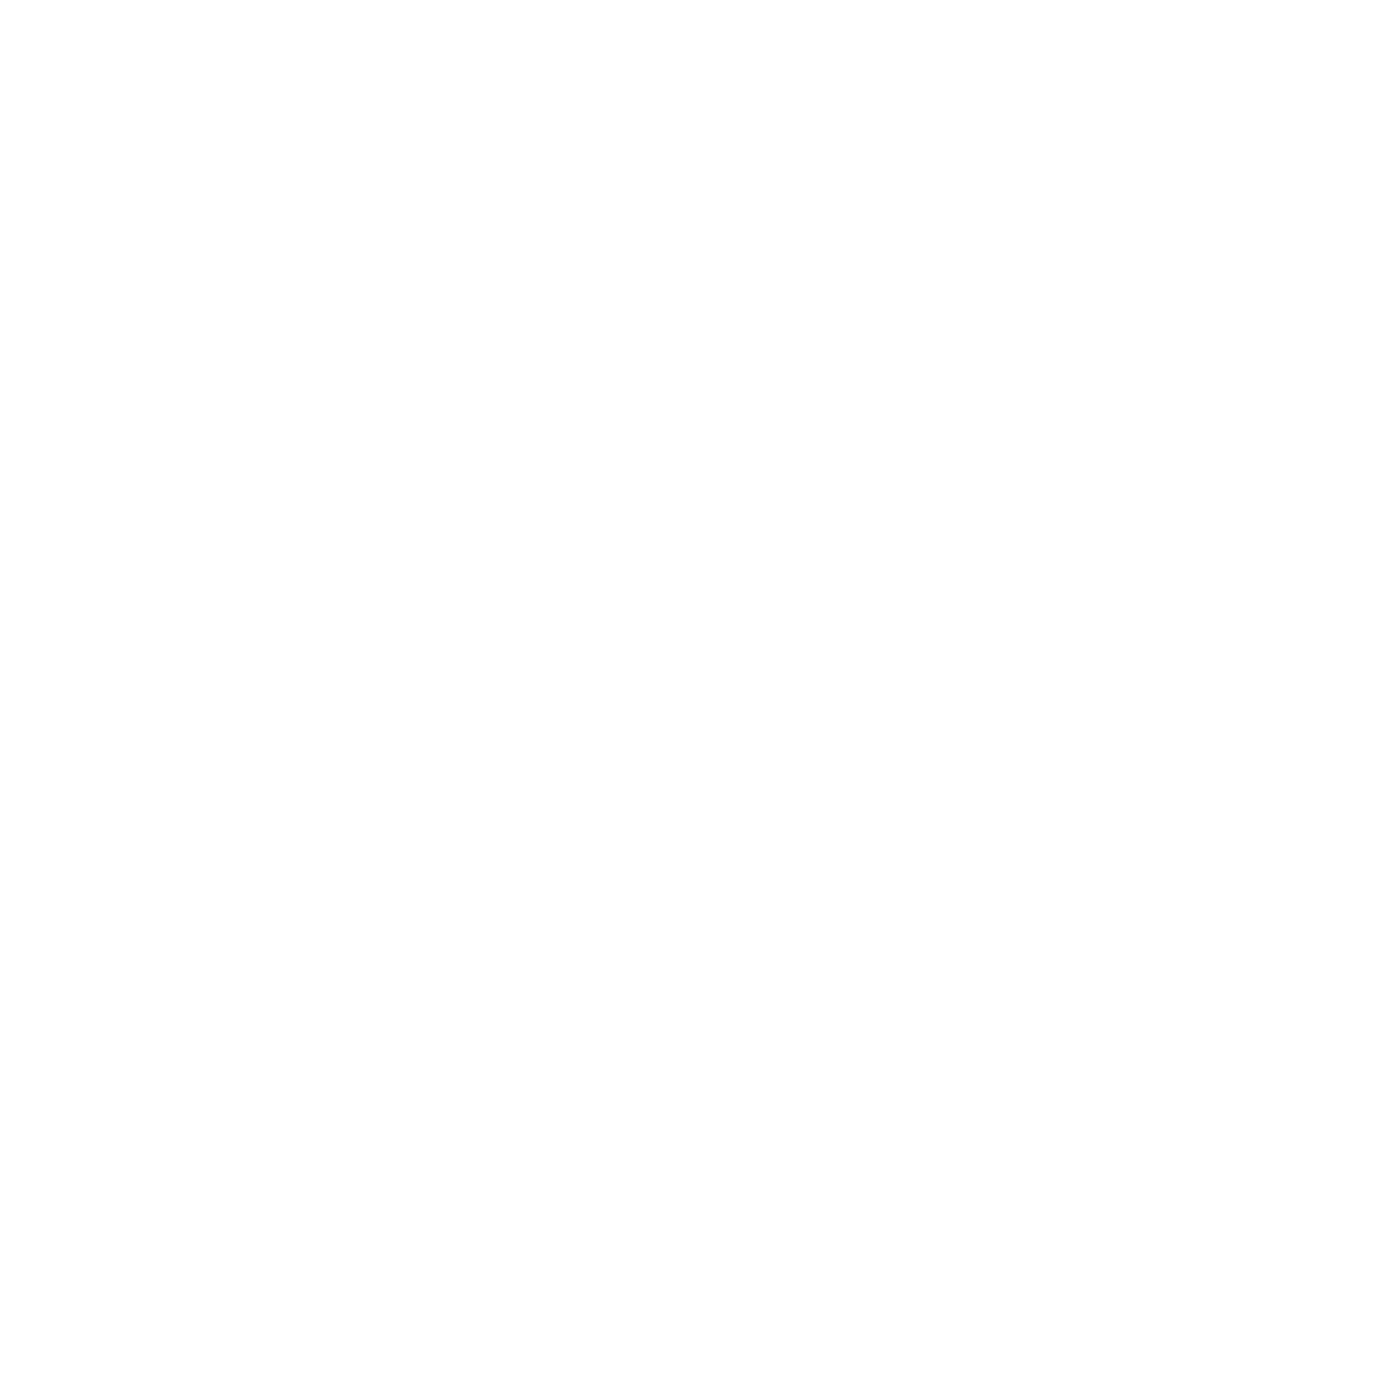 waiwai555 - HacksawGaming